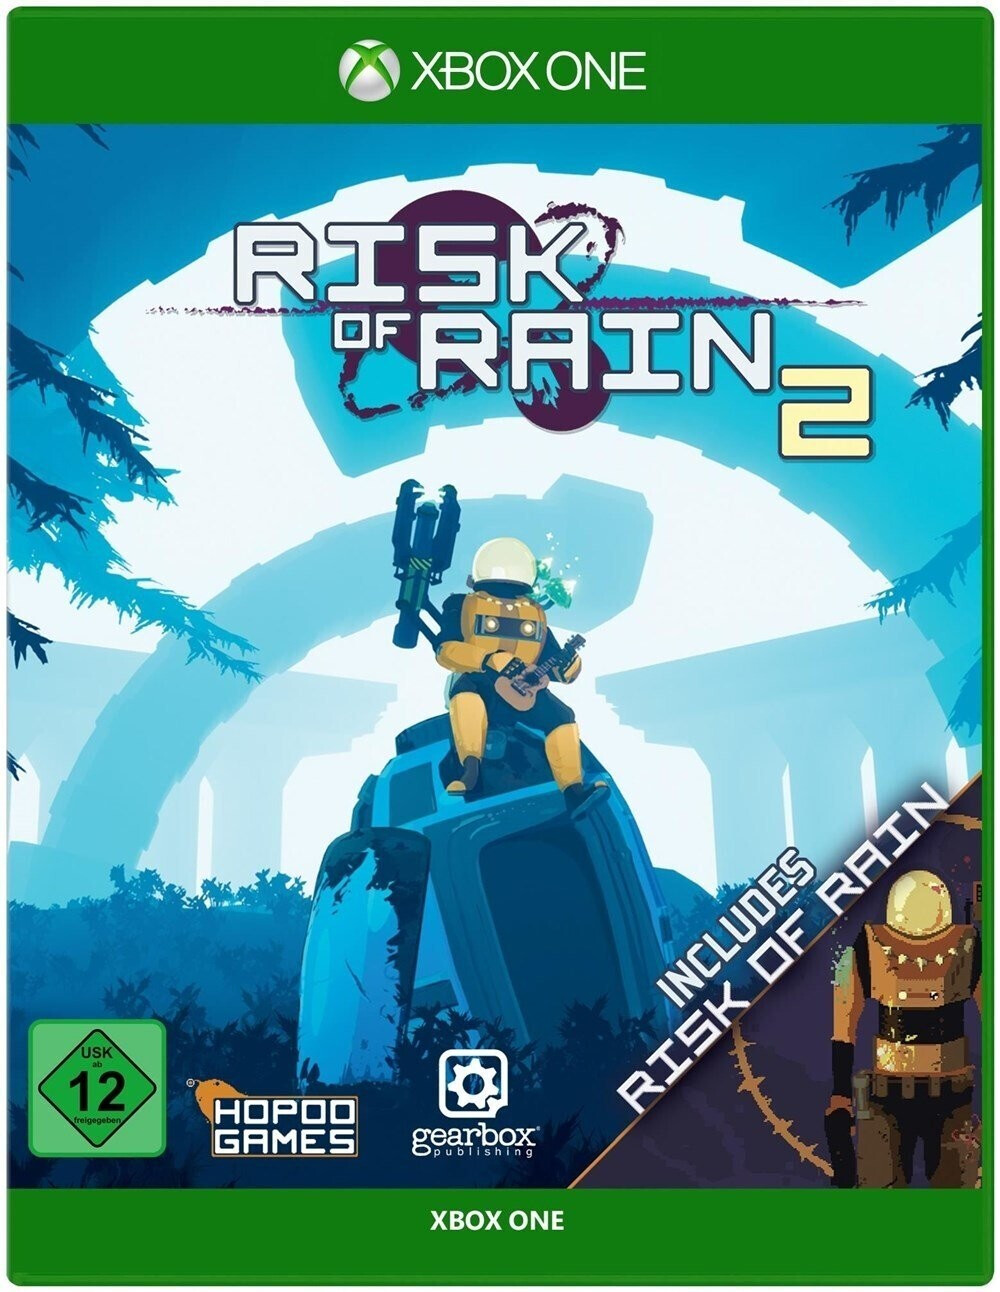 download rain world xbox